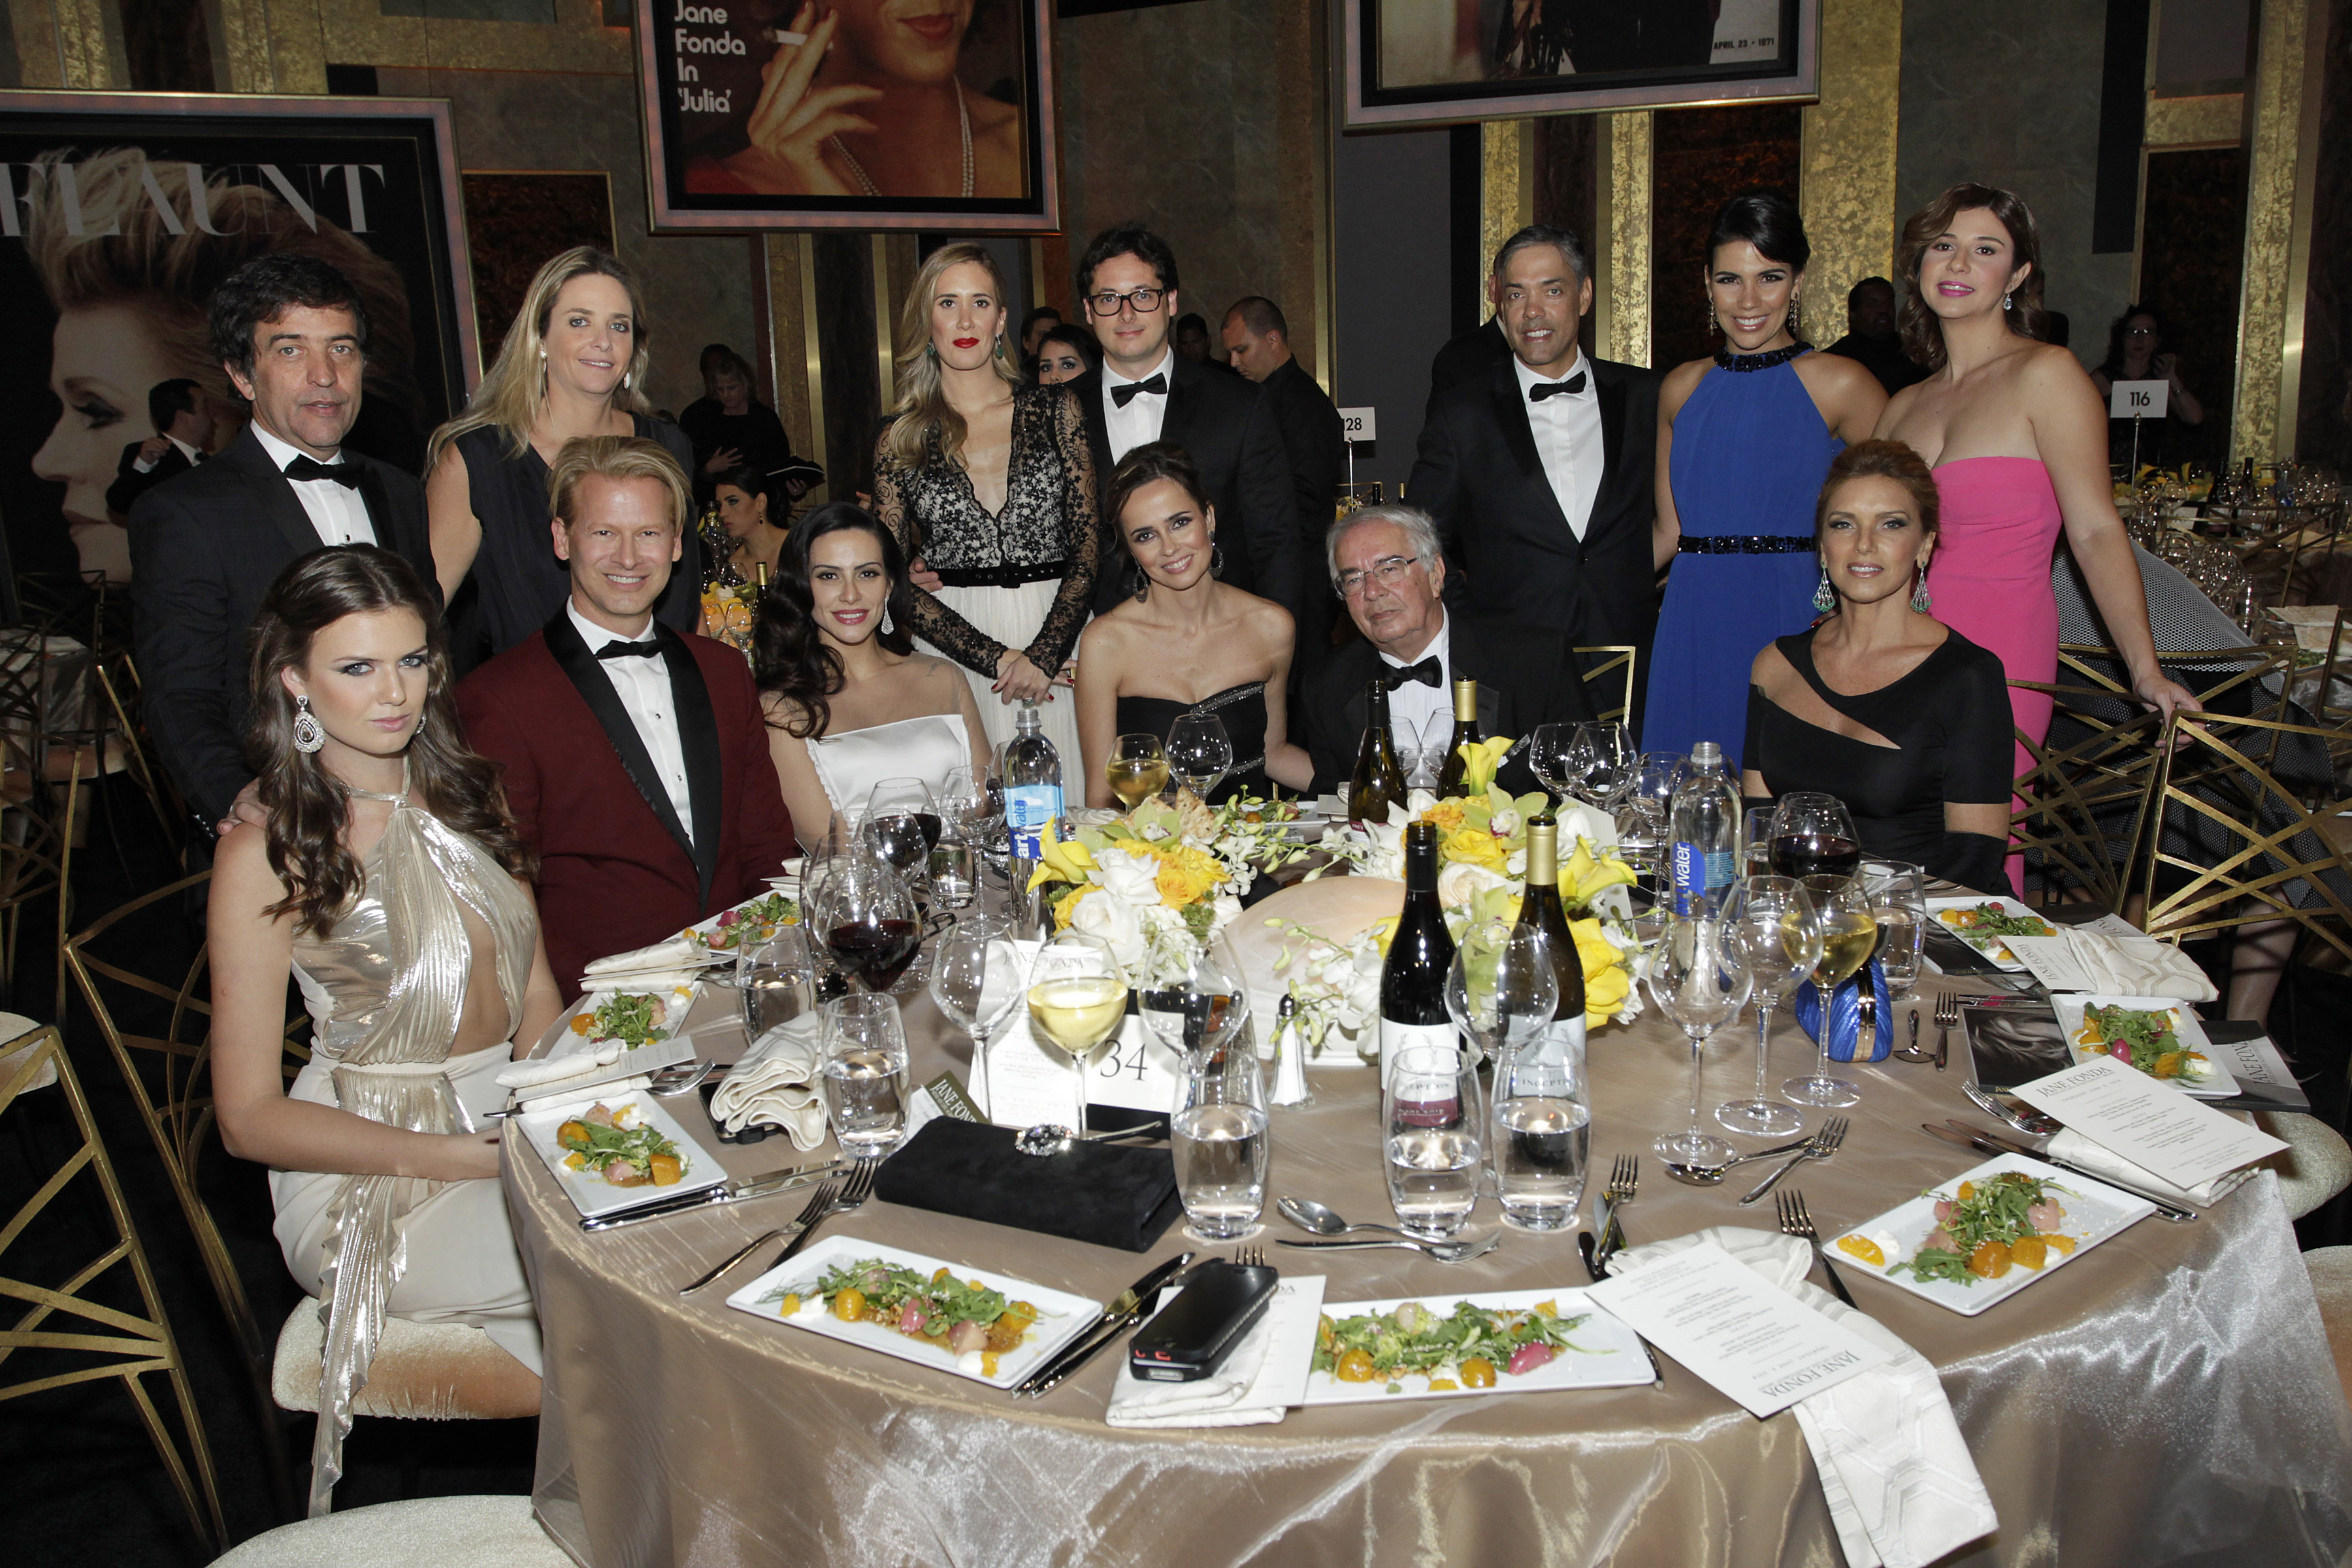 Marcello Coltro & Guests (including Brazilian Actress Cleo Pires and Designer Ricardo Almeida) at 42 AFI Life Achievement Award